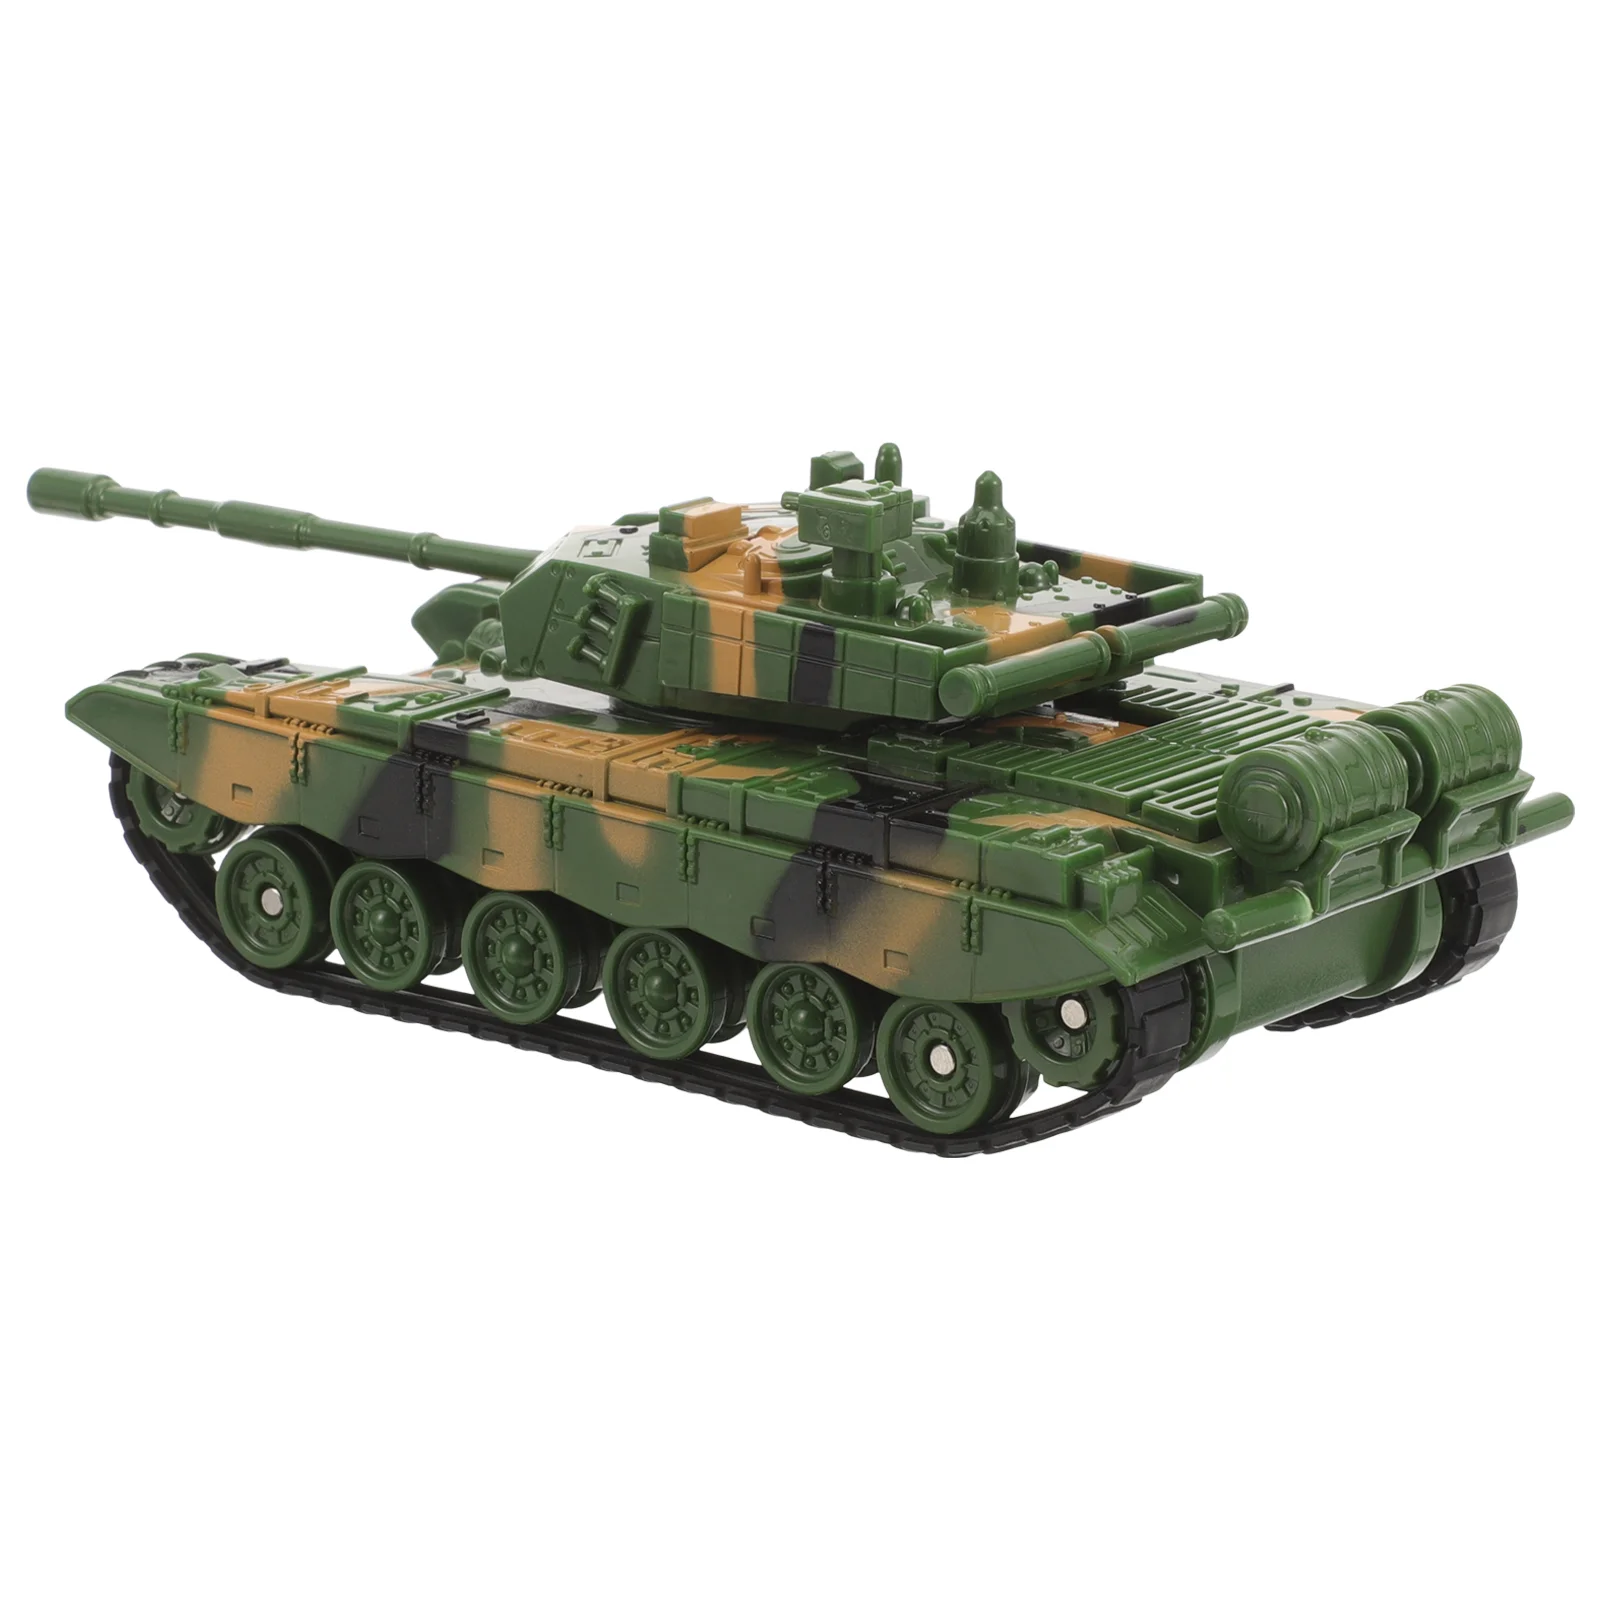 

Emulation Tank Toy Tank Model for Kids Children (Camouflage Green)